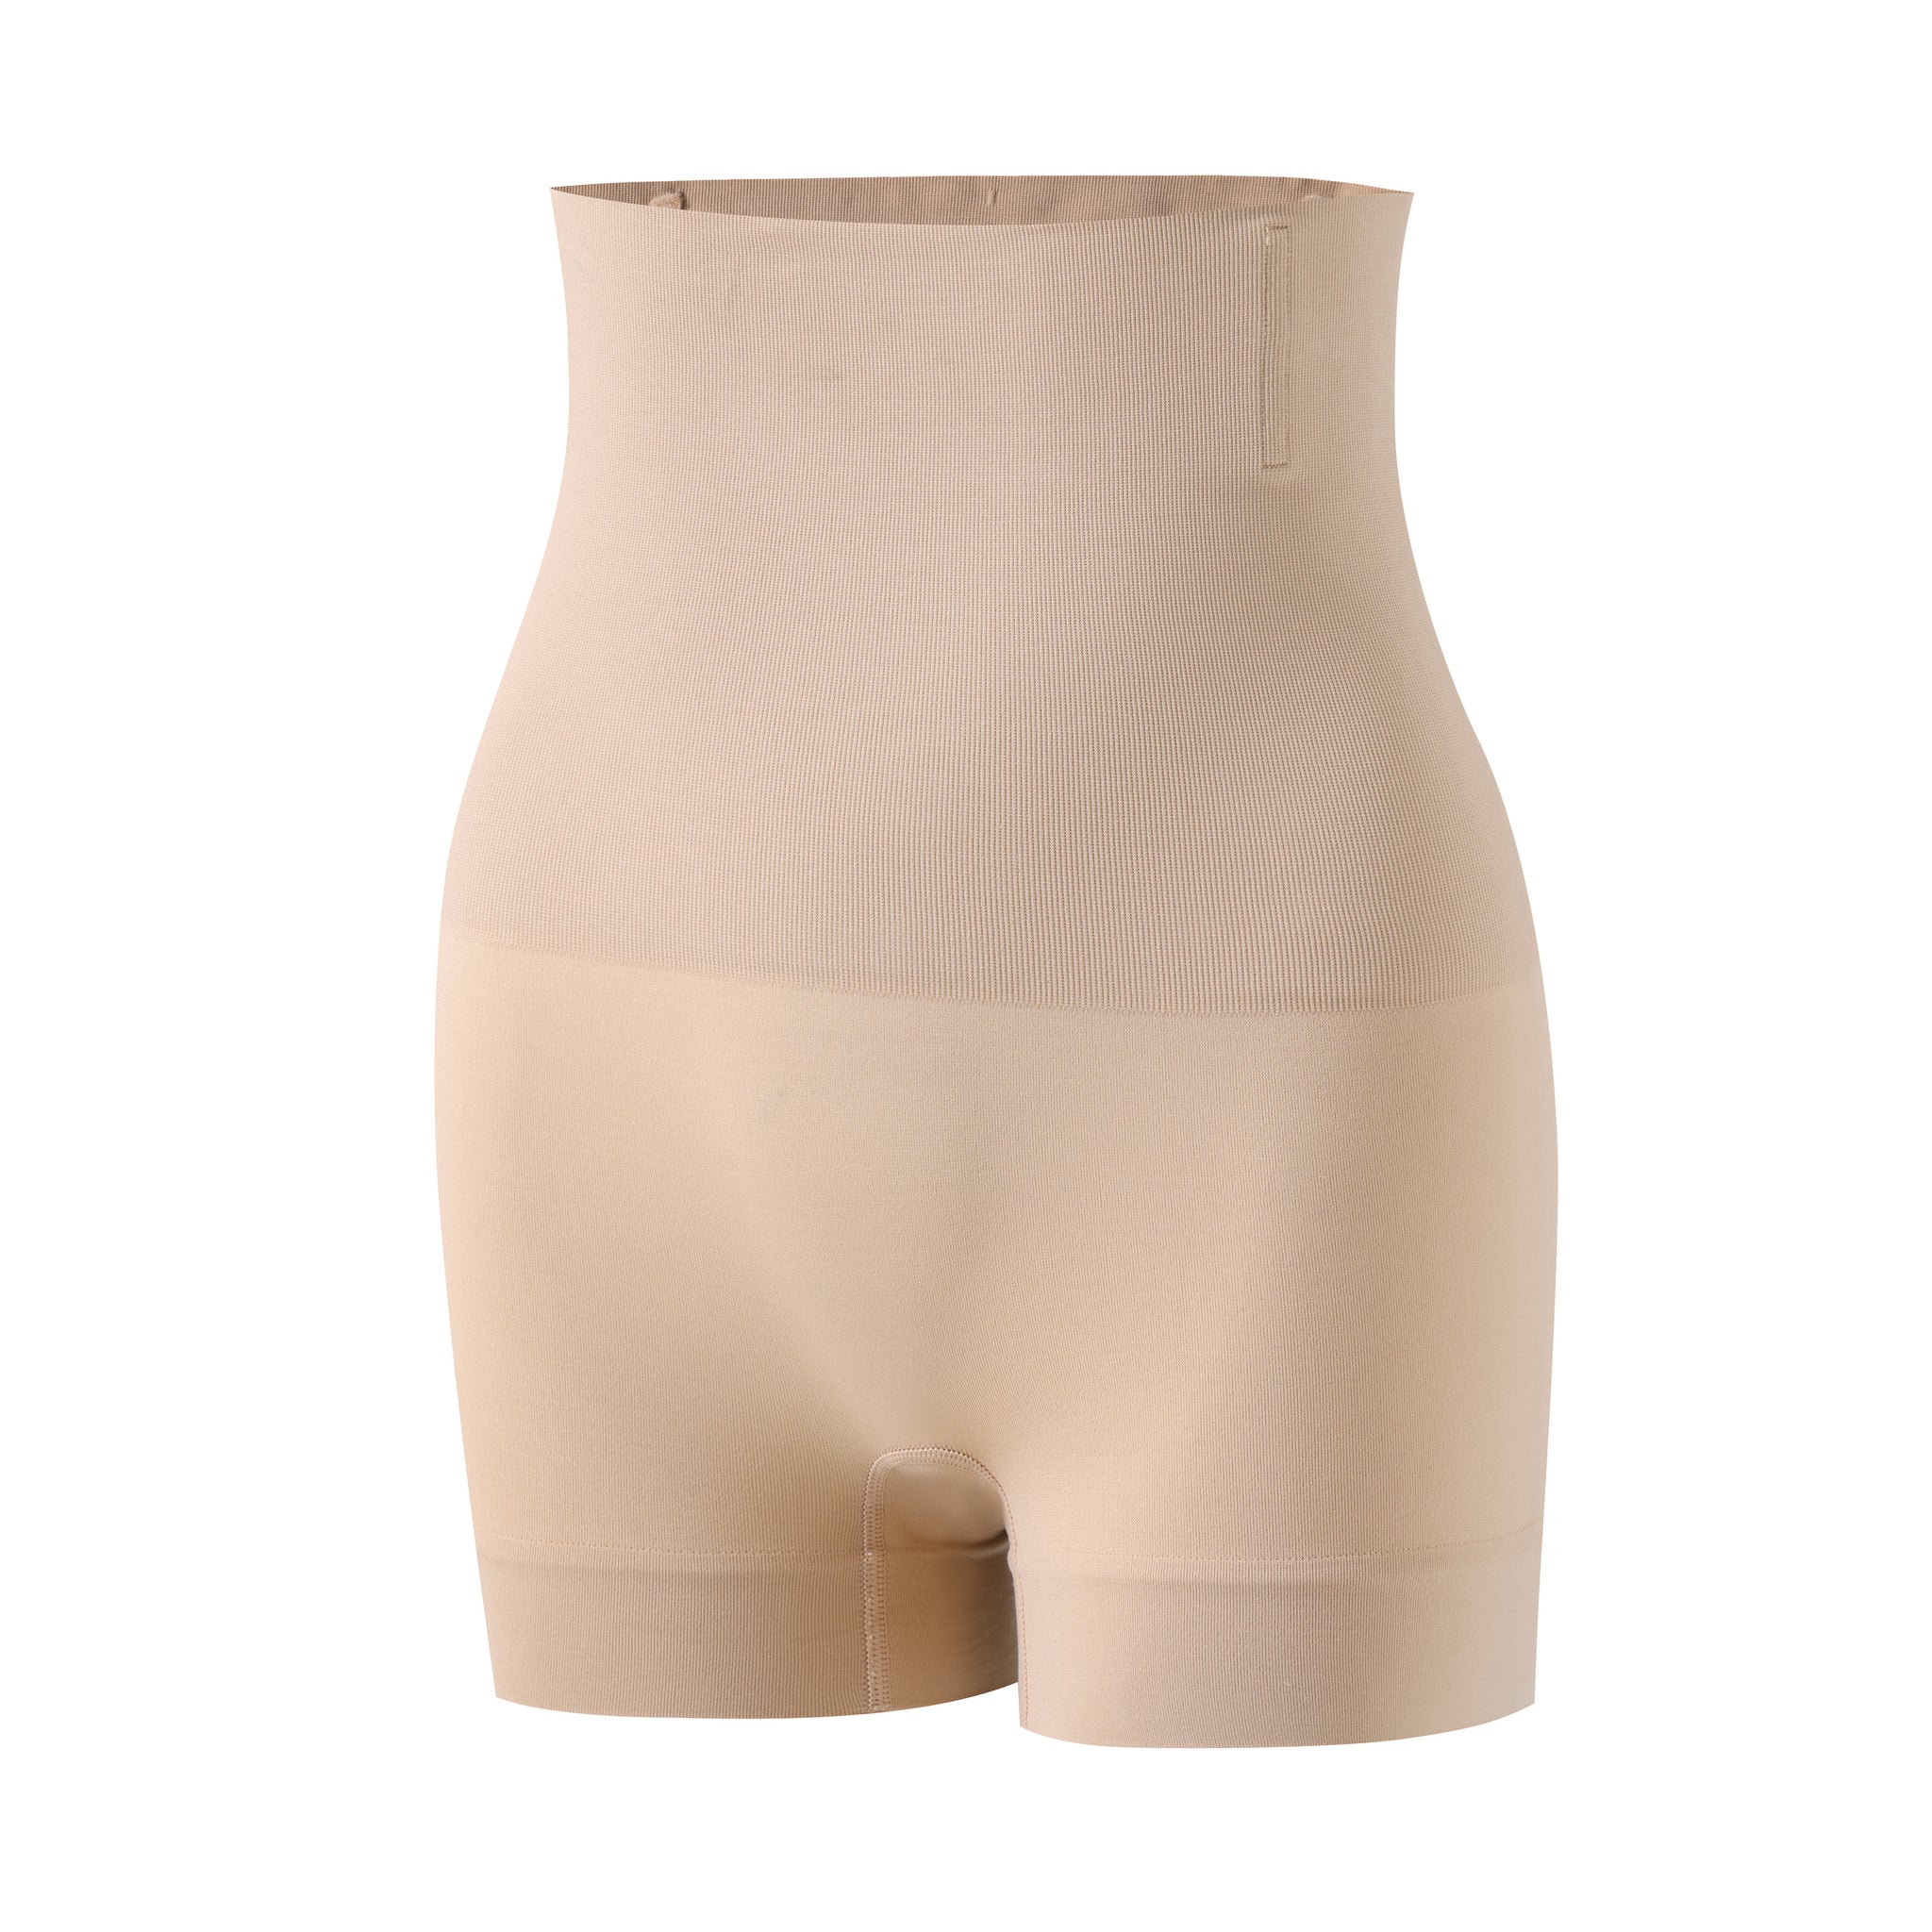  DERCA Shapewear Shorts Tummy Control For Women Shaping  Boyshorts Body Shaper Underwear Seamless Shorts Under Dresses